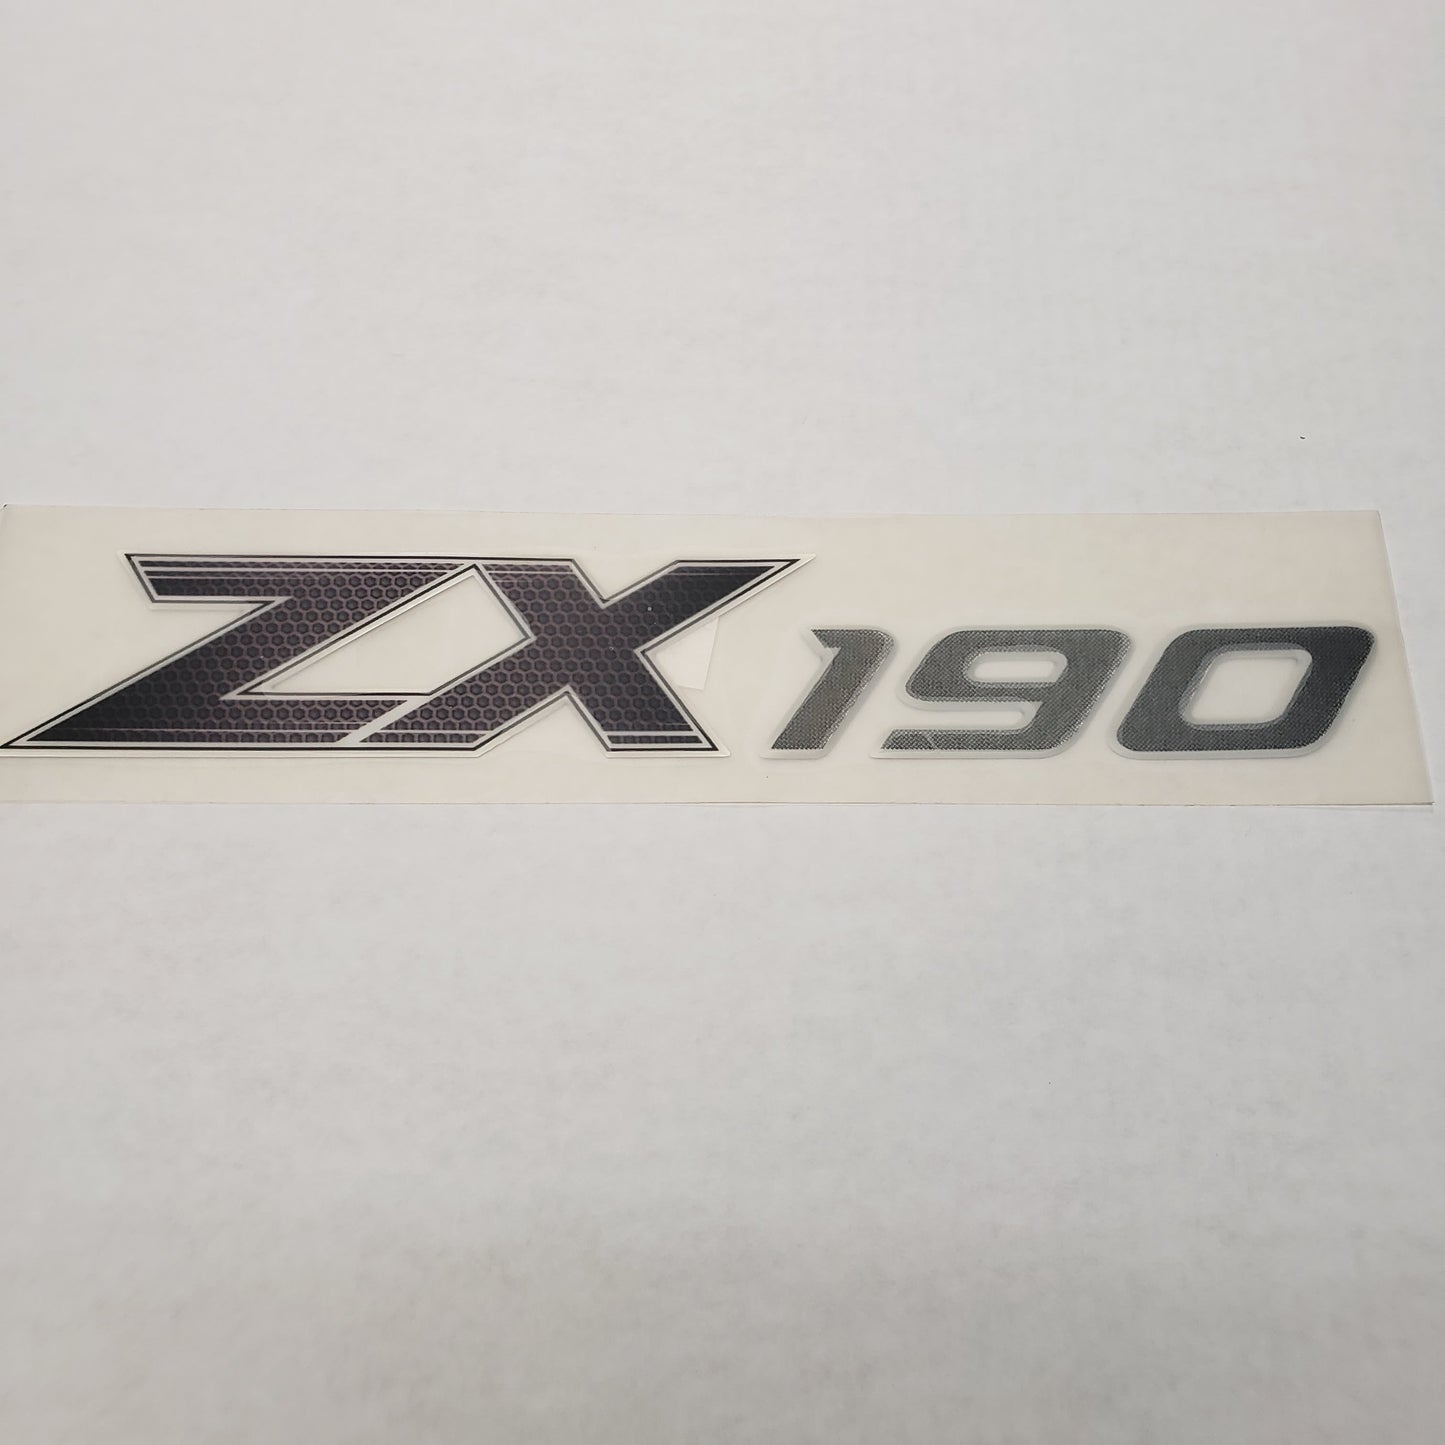 New Authentic Skeeter ZX190 Series Emblem Black/ Silver 12 7/8" X 2.13"